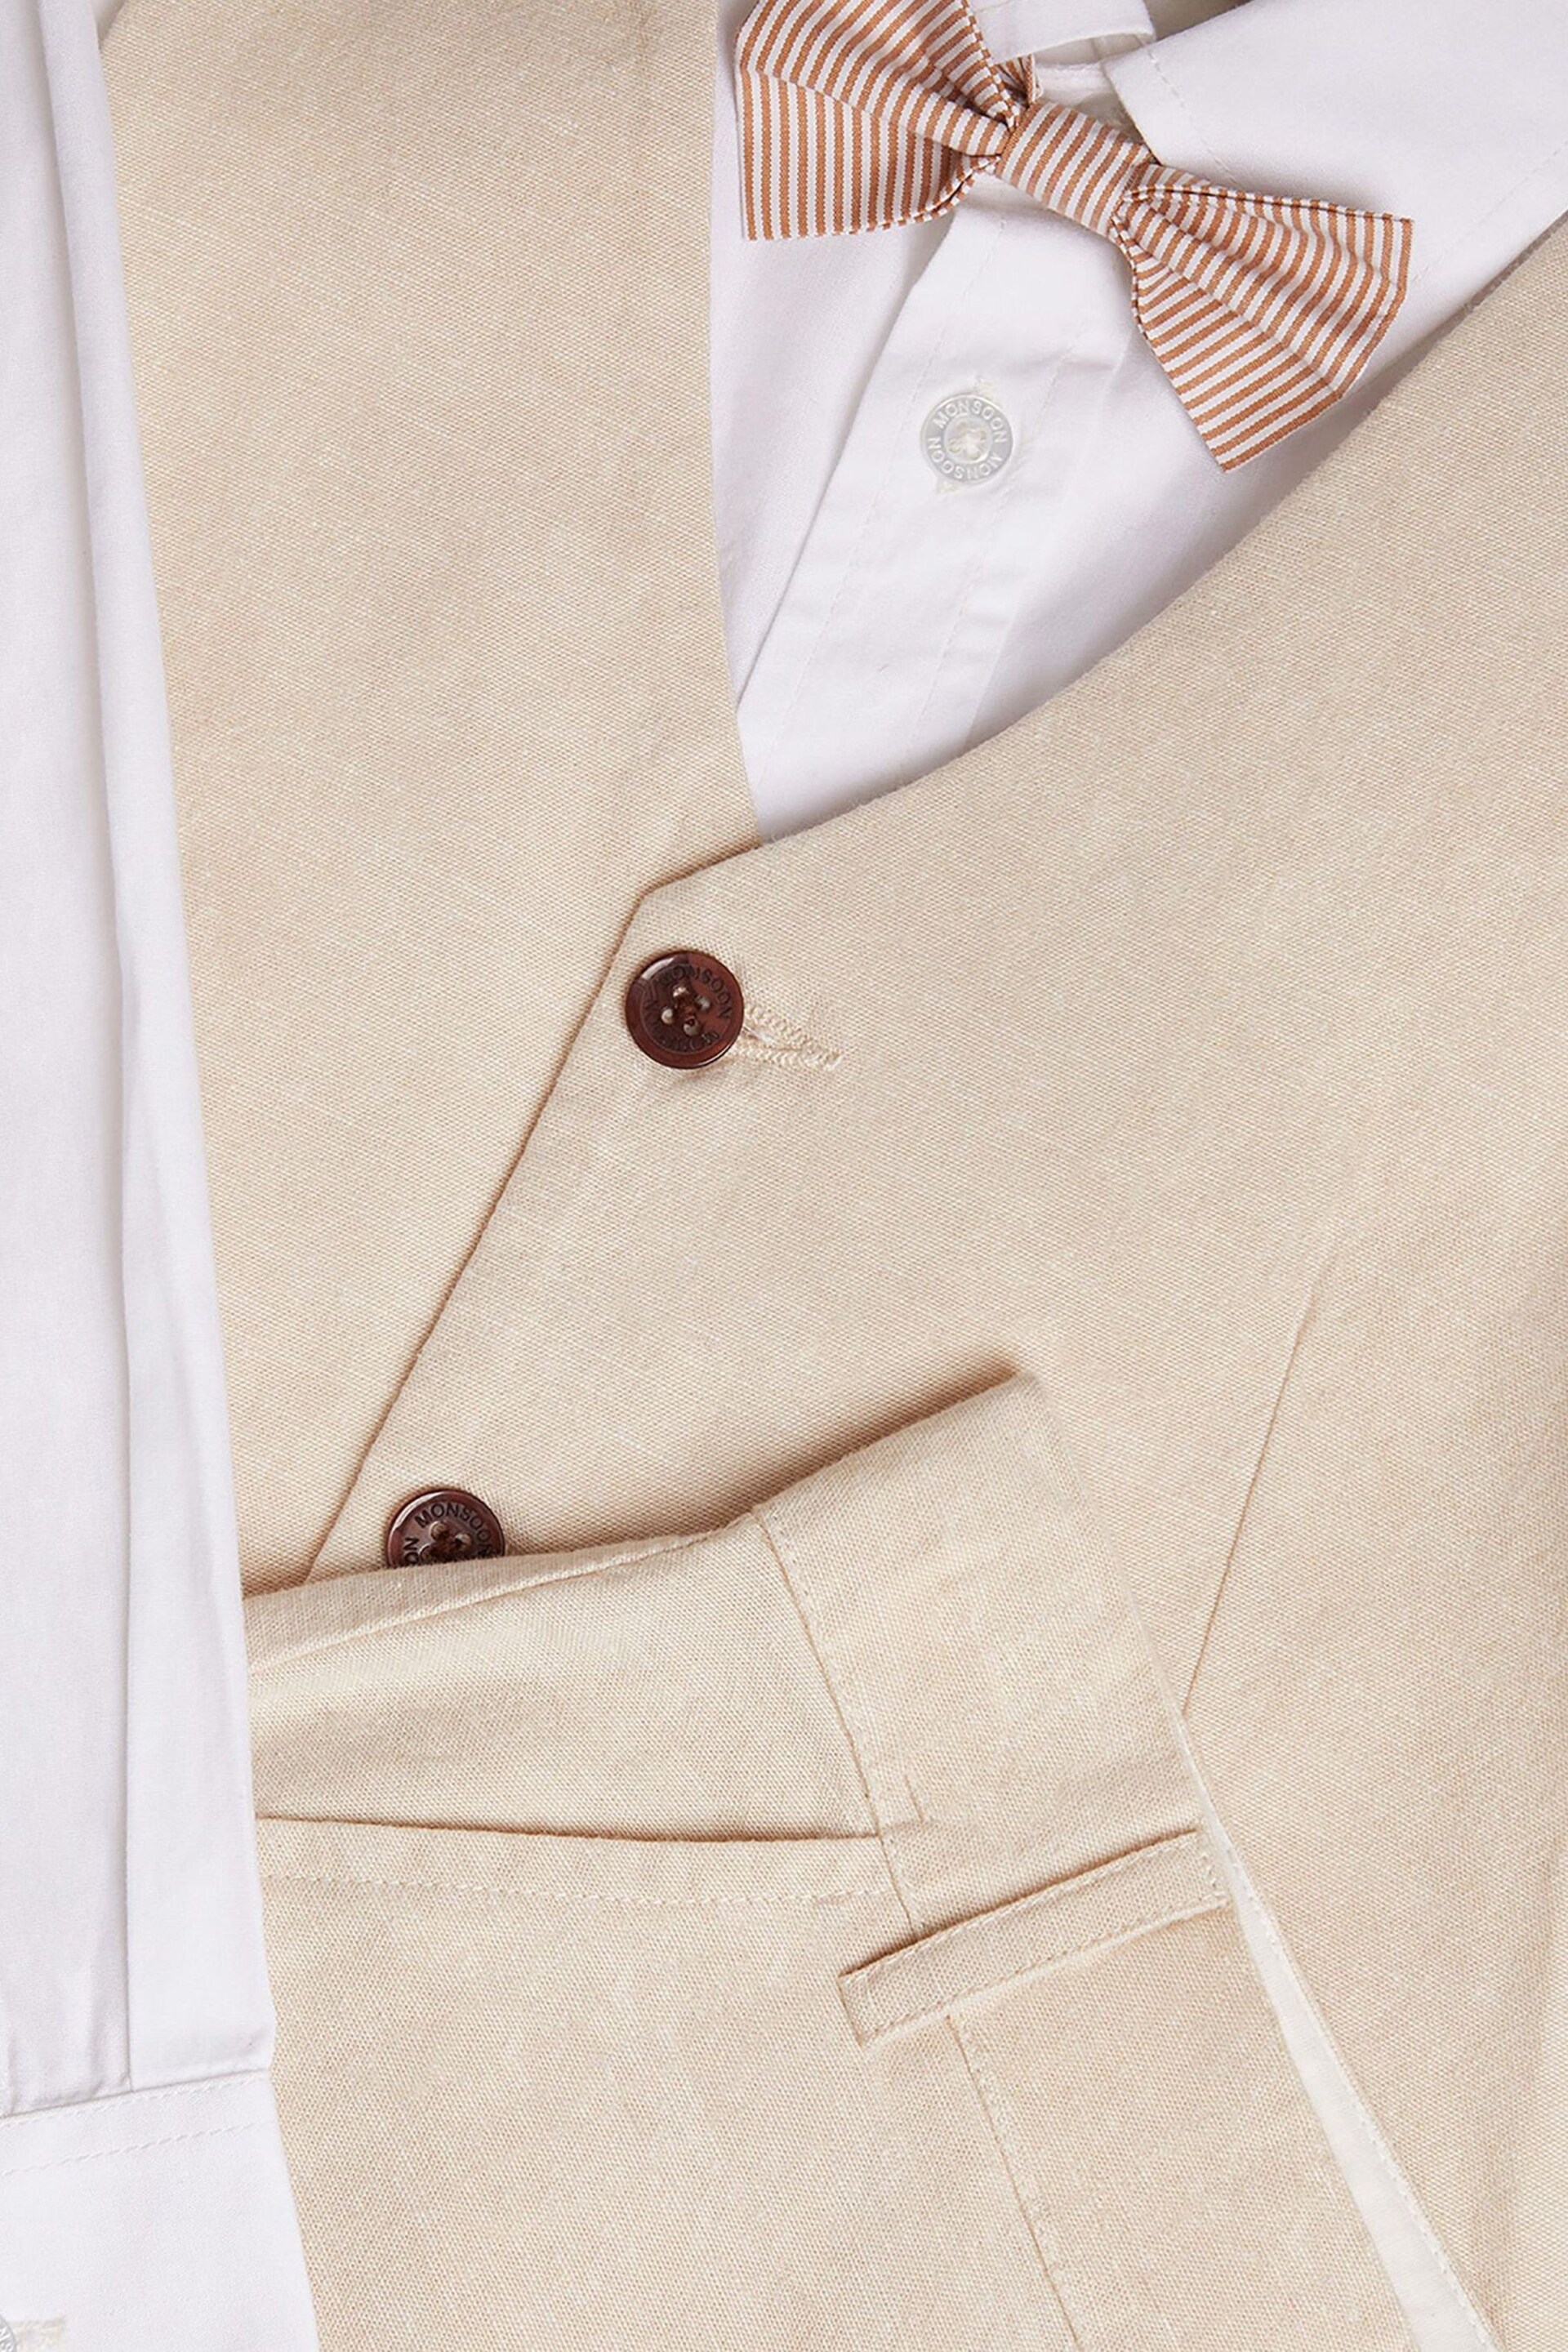 Monsoon Natural 4 Piece Smart Linen Suit in Linen Blend - Image 4 of 4